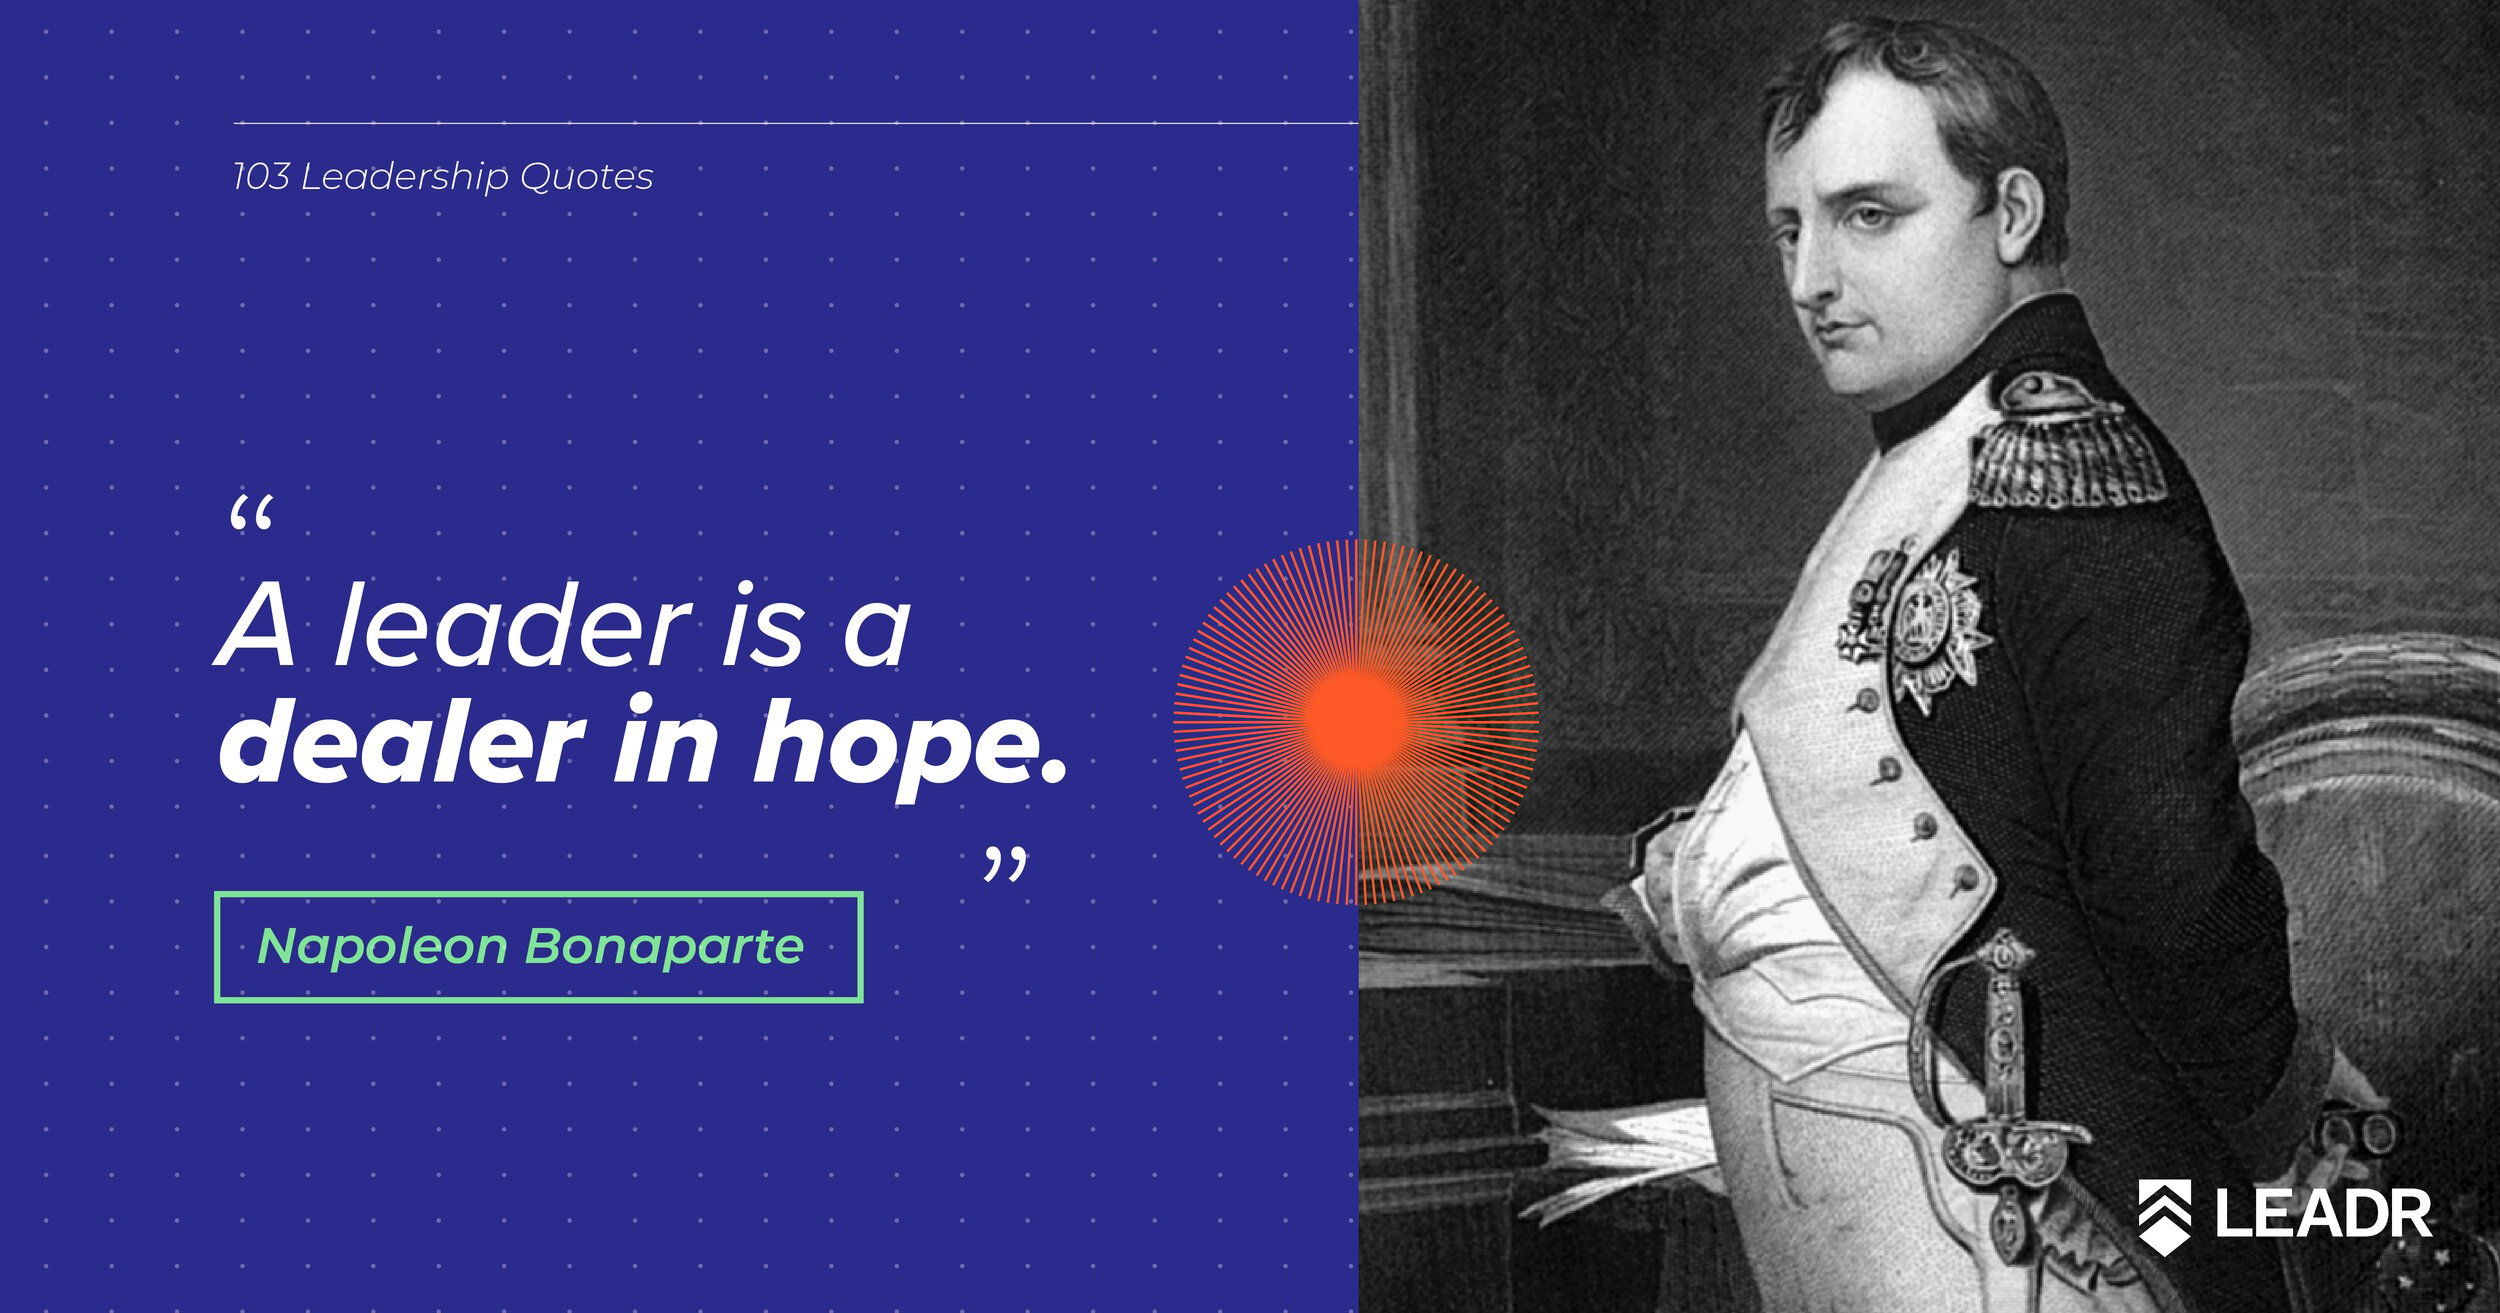 Royalty free downloadable leadership quotes - Napoleon Bonaparte